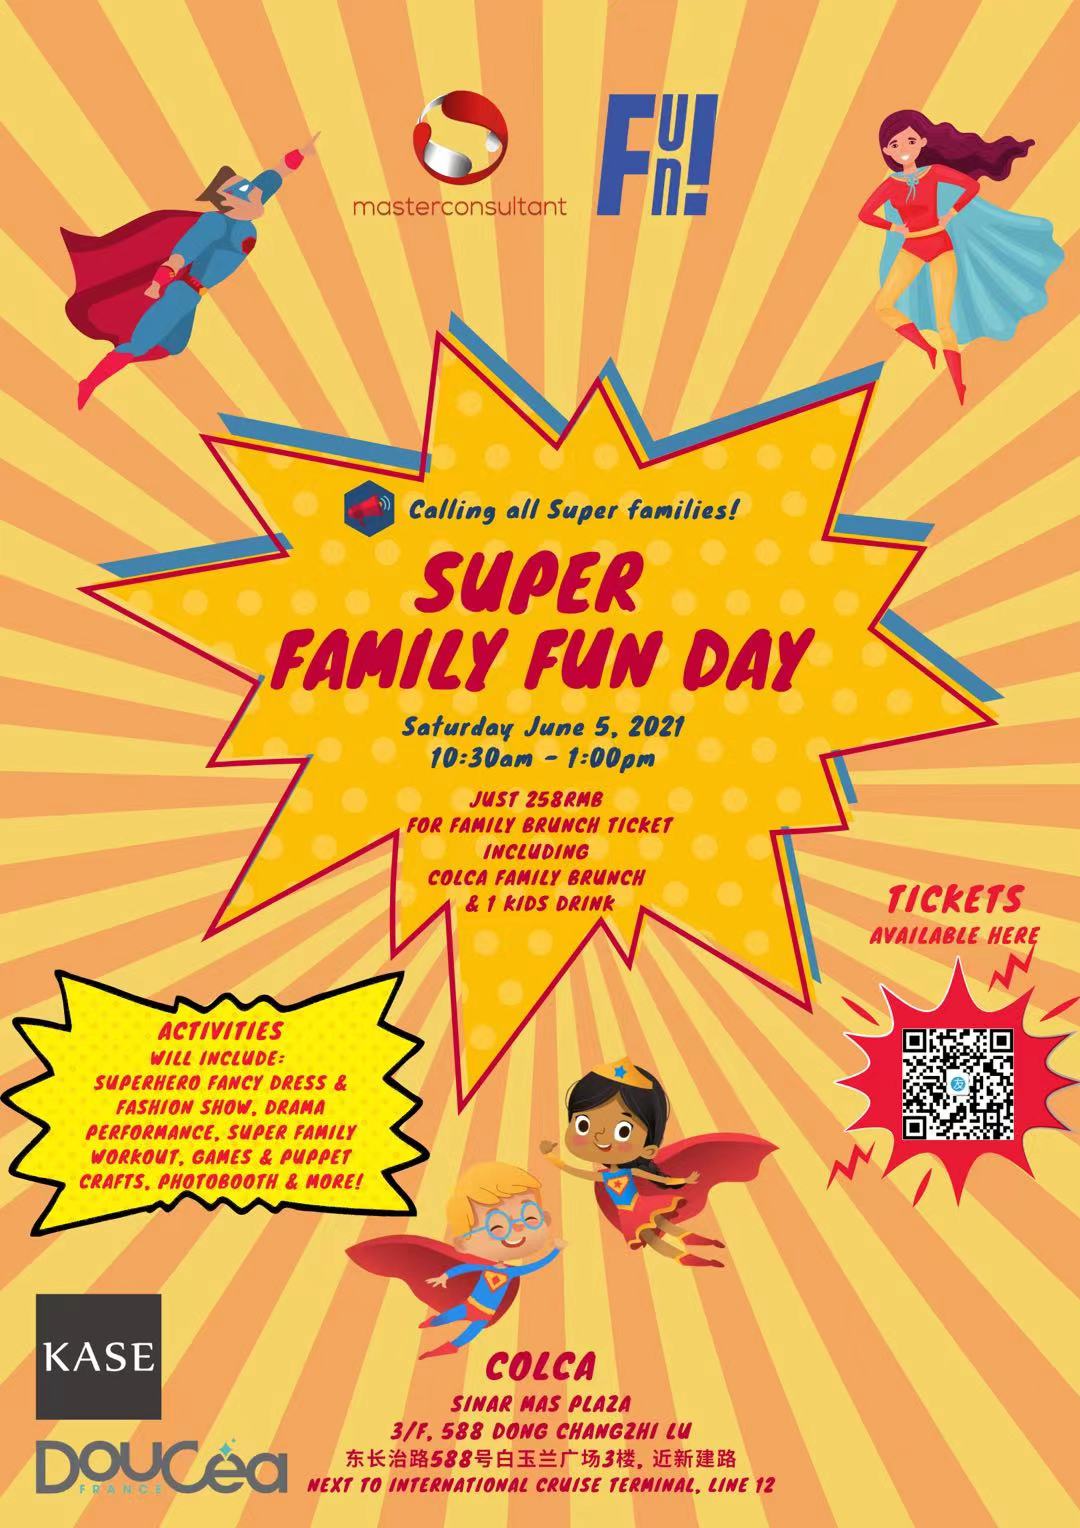 Super family fun day | Shanghai Events